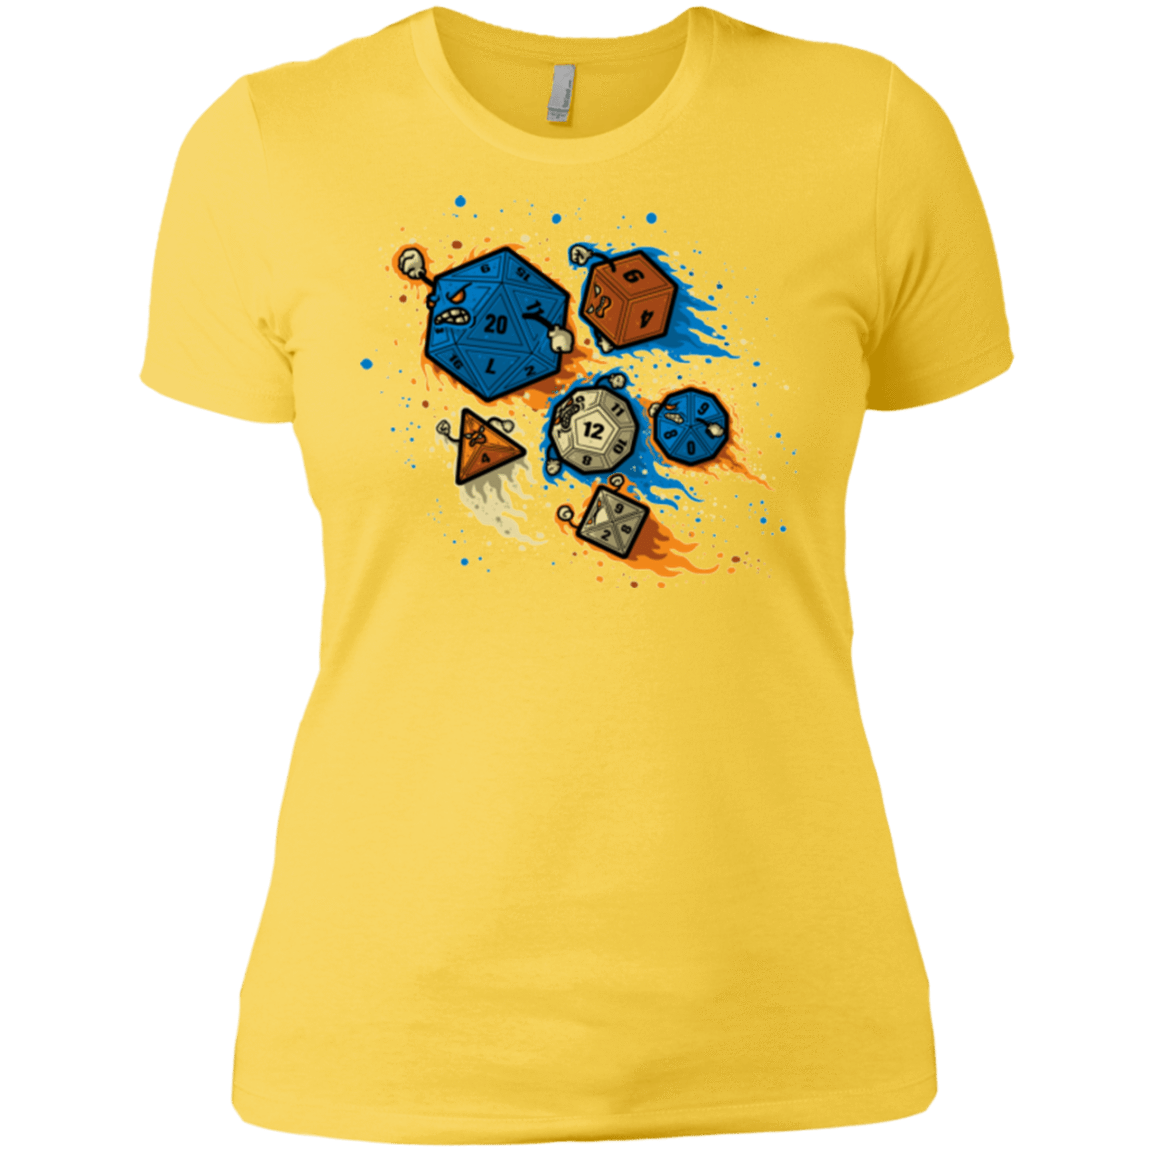 T-Shirts Vibrant Yellow / X-Small RPG UNITED REMIX Women's Premium T-Shirt